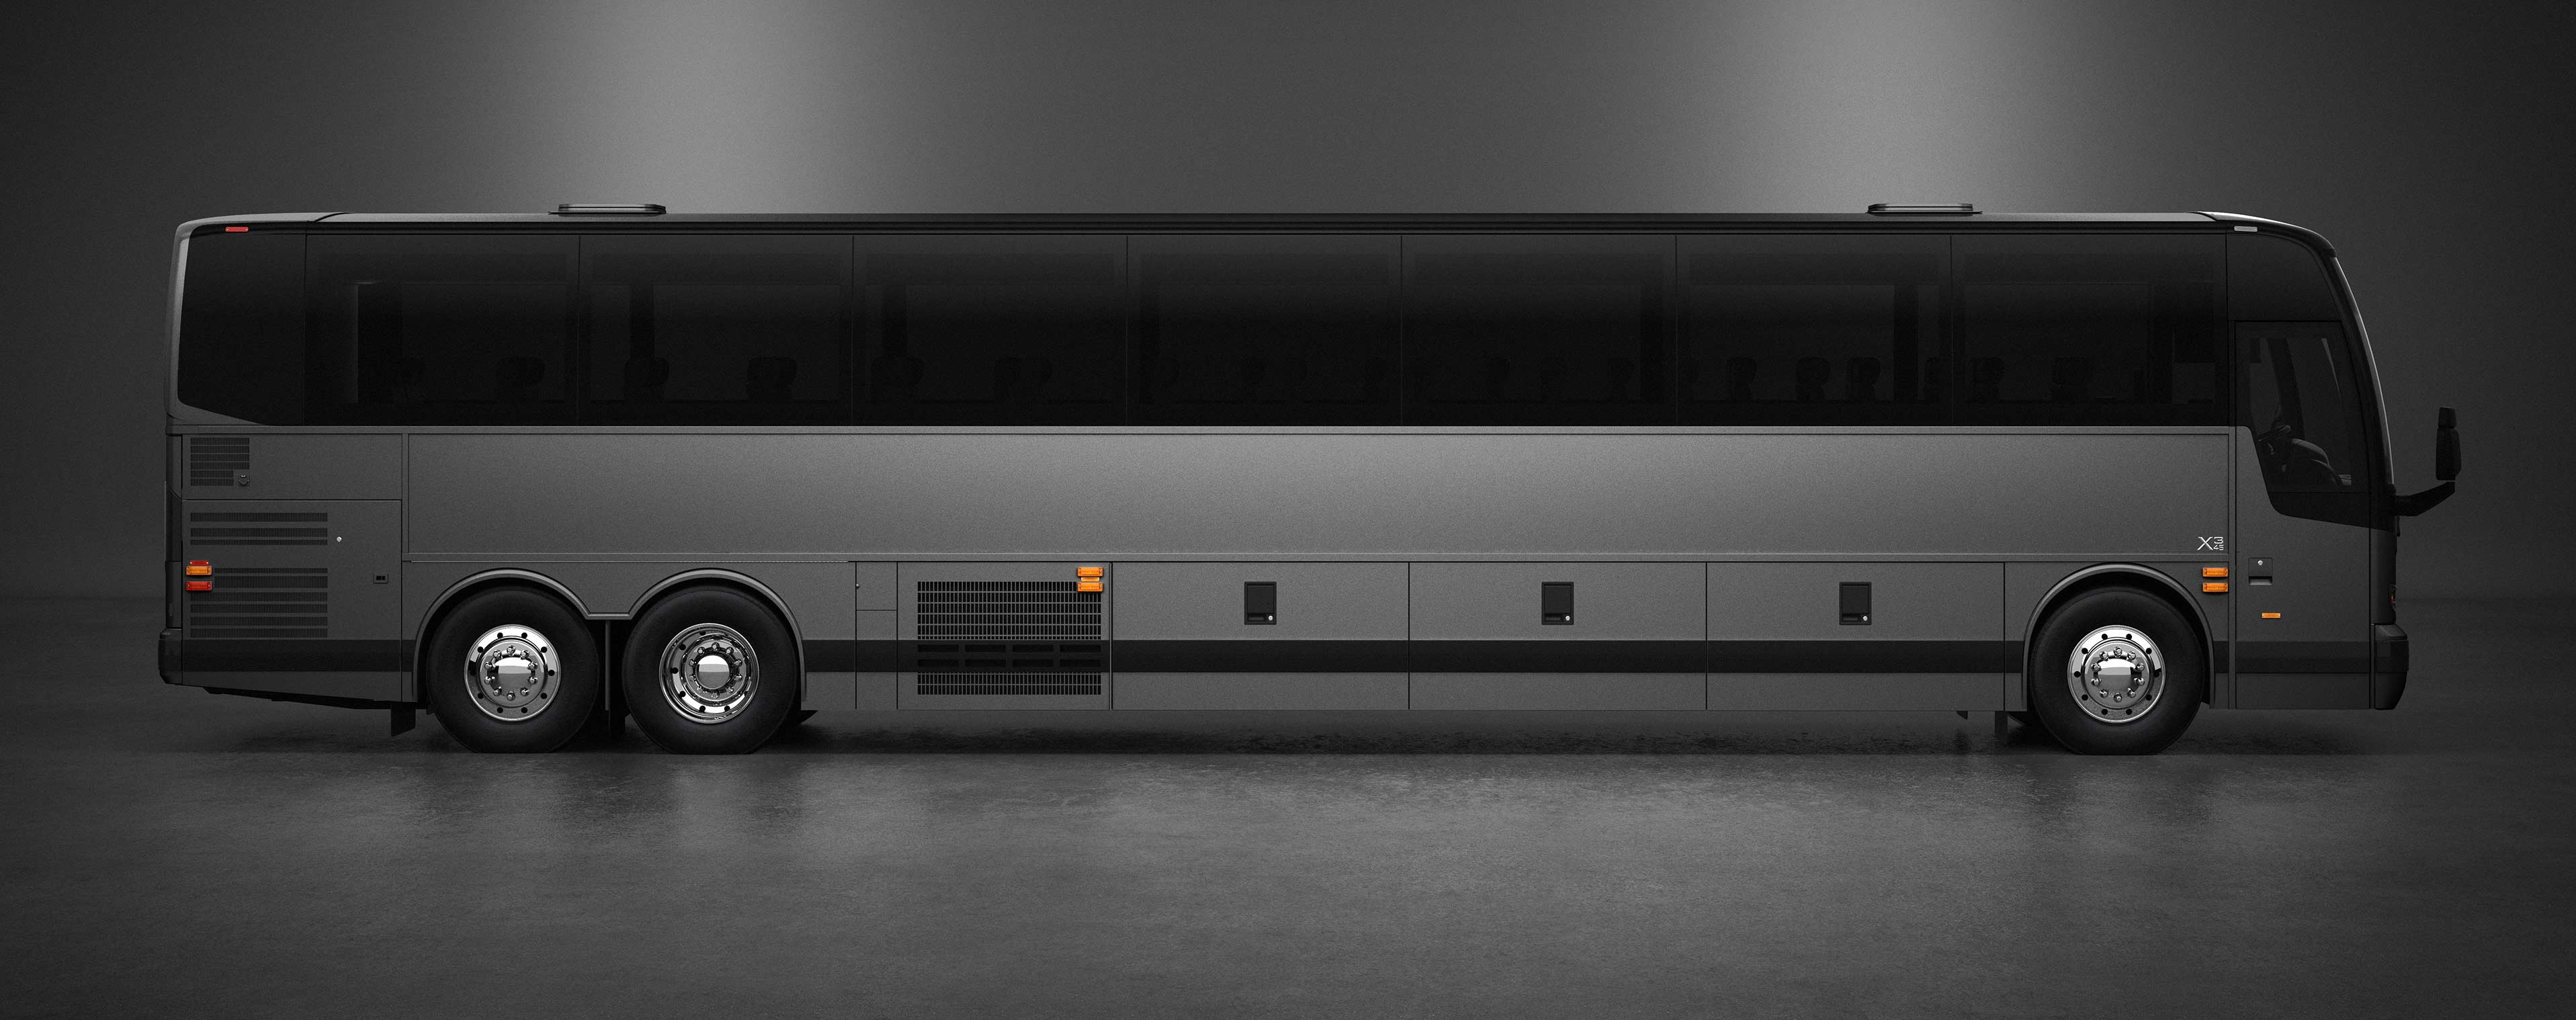 X3-45 Bus